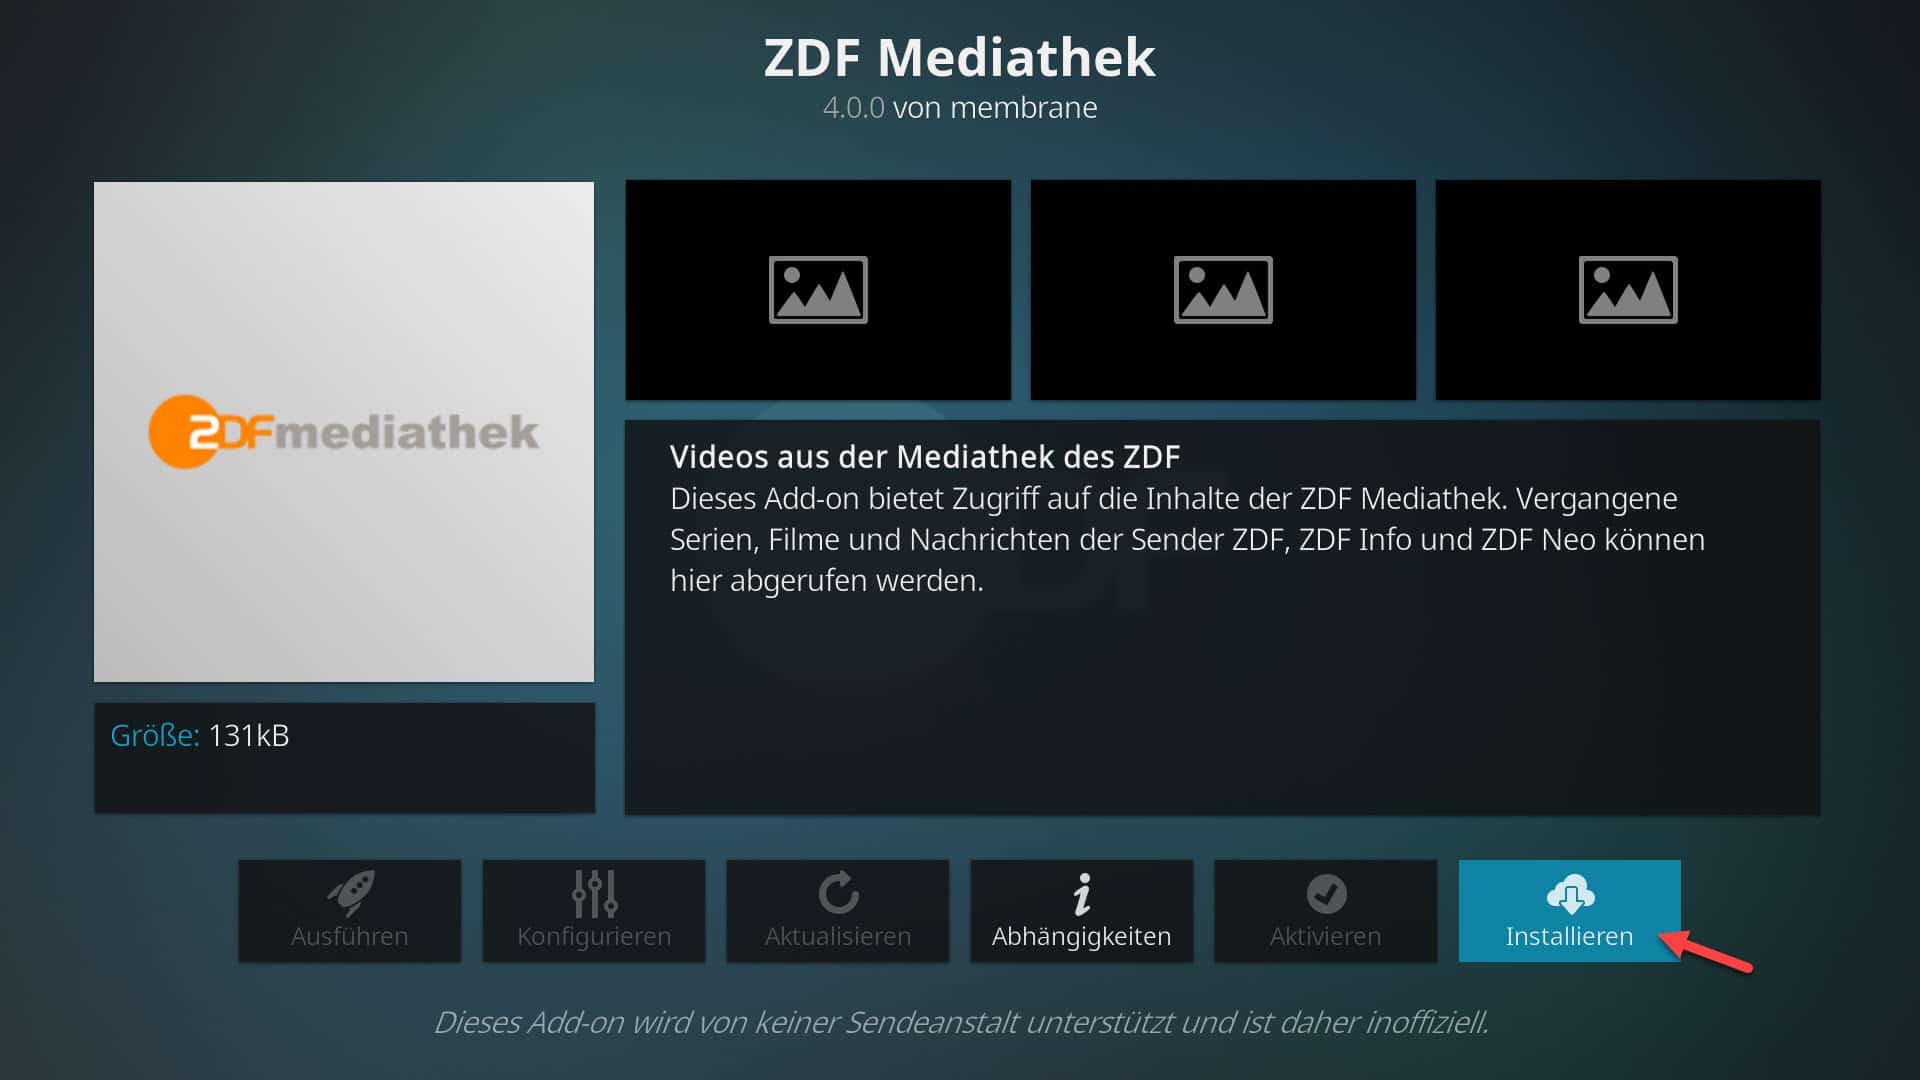 das-zdf-mediathek-kodi-addon-installieren-step-by-step-kodiguide